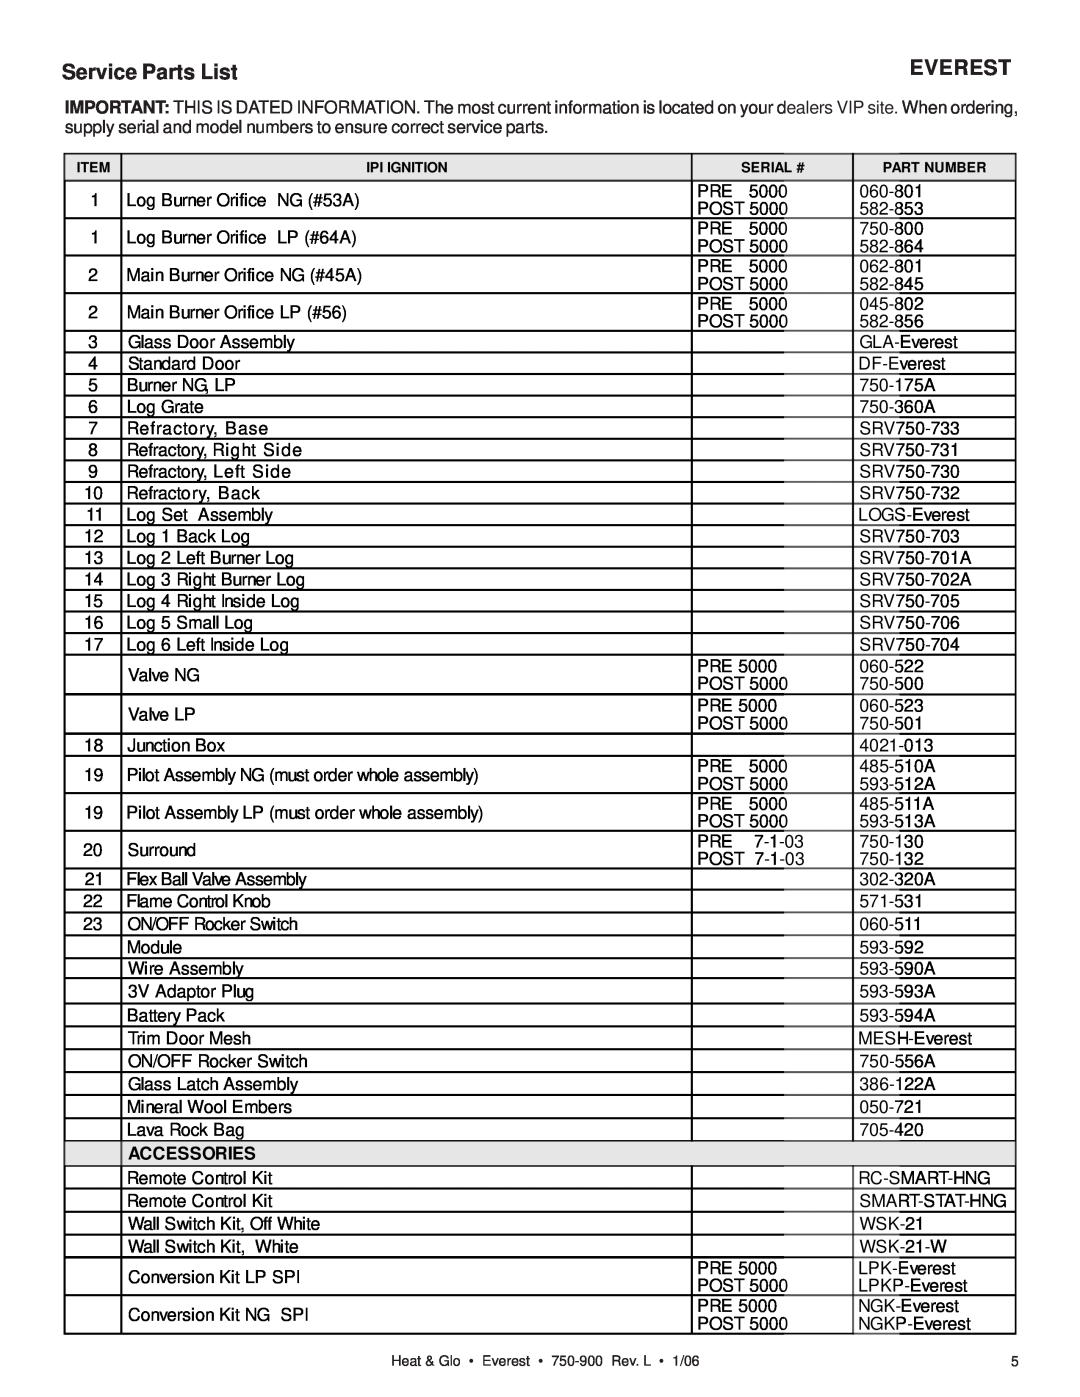 Heat & Glo LifeStyle EVEREST manual Service Parts List, Everest, Accessories 